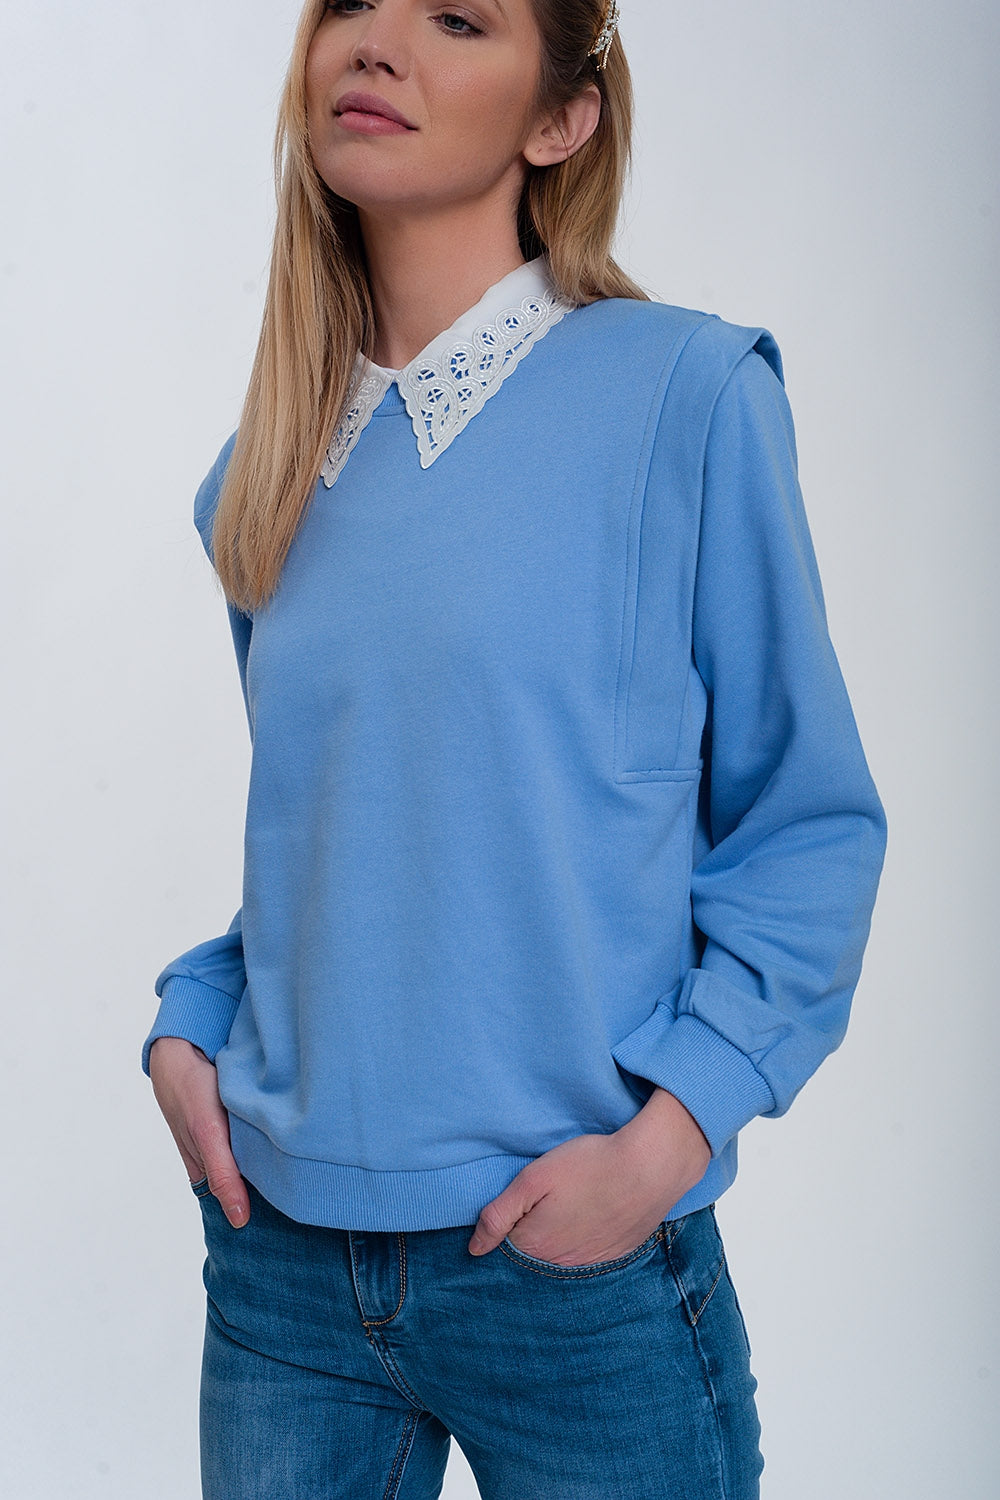 Boyfriend sweatshirt with shoulder details in blue Szua Store